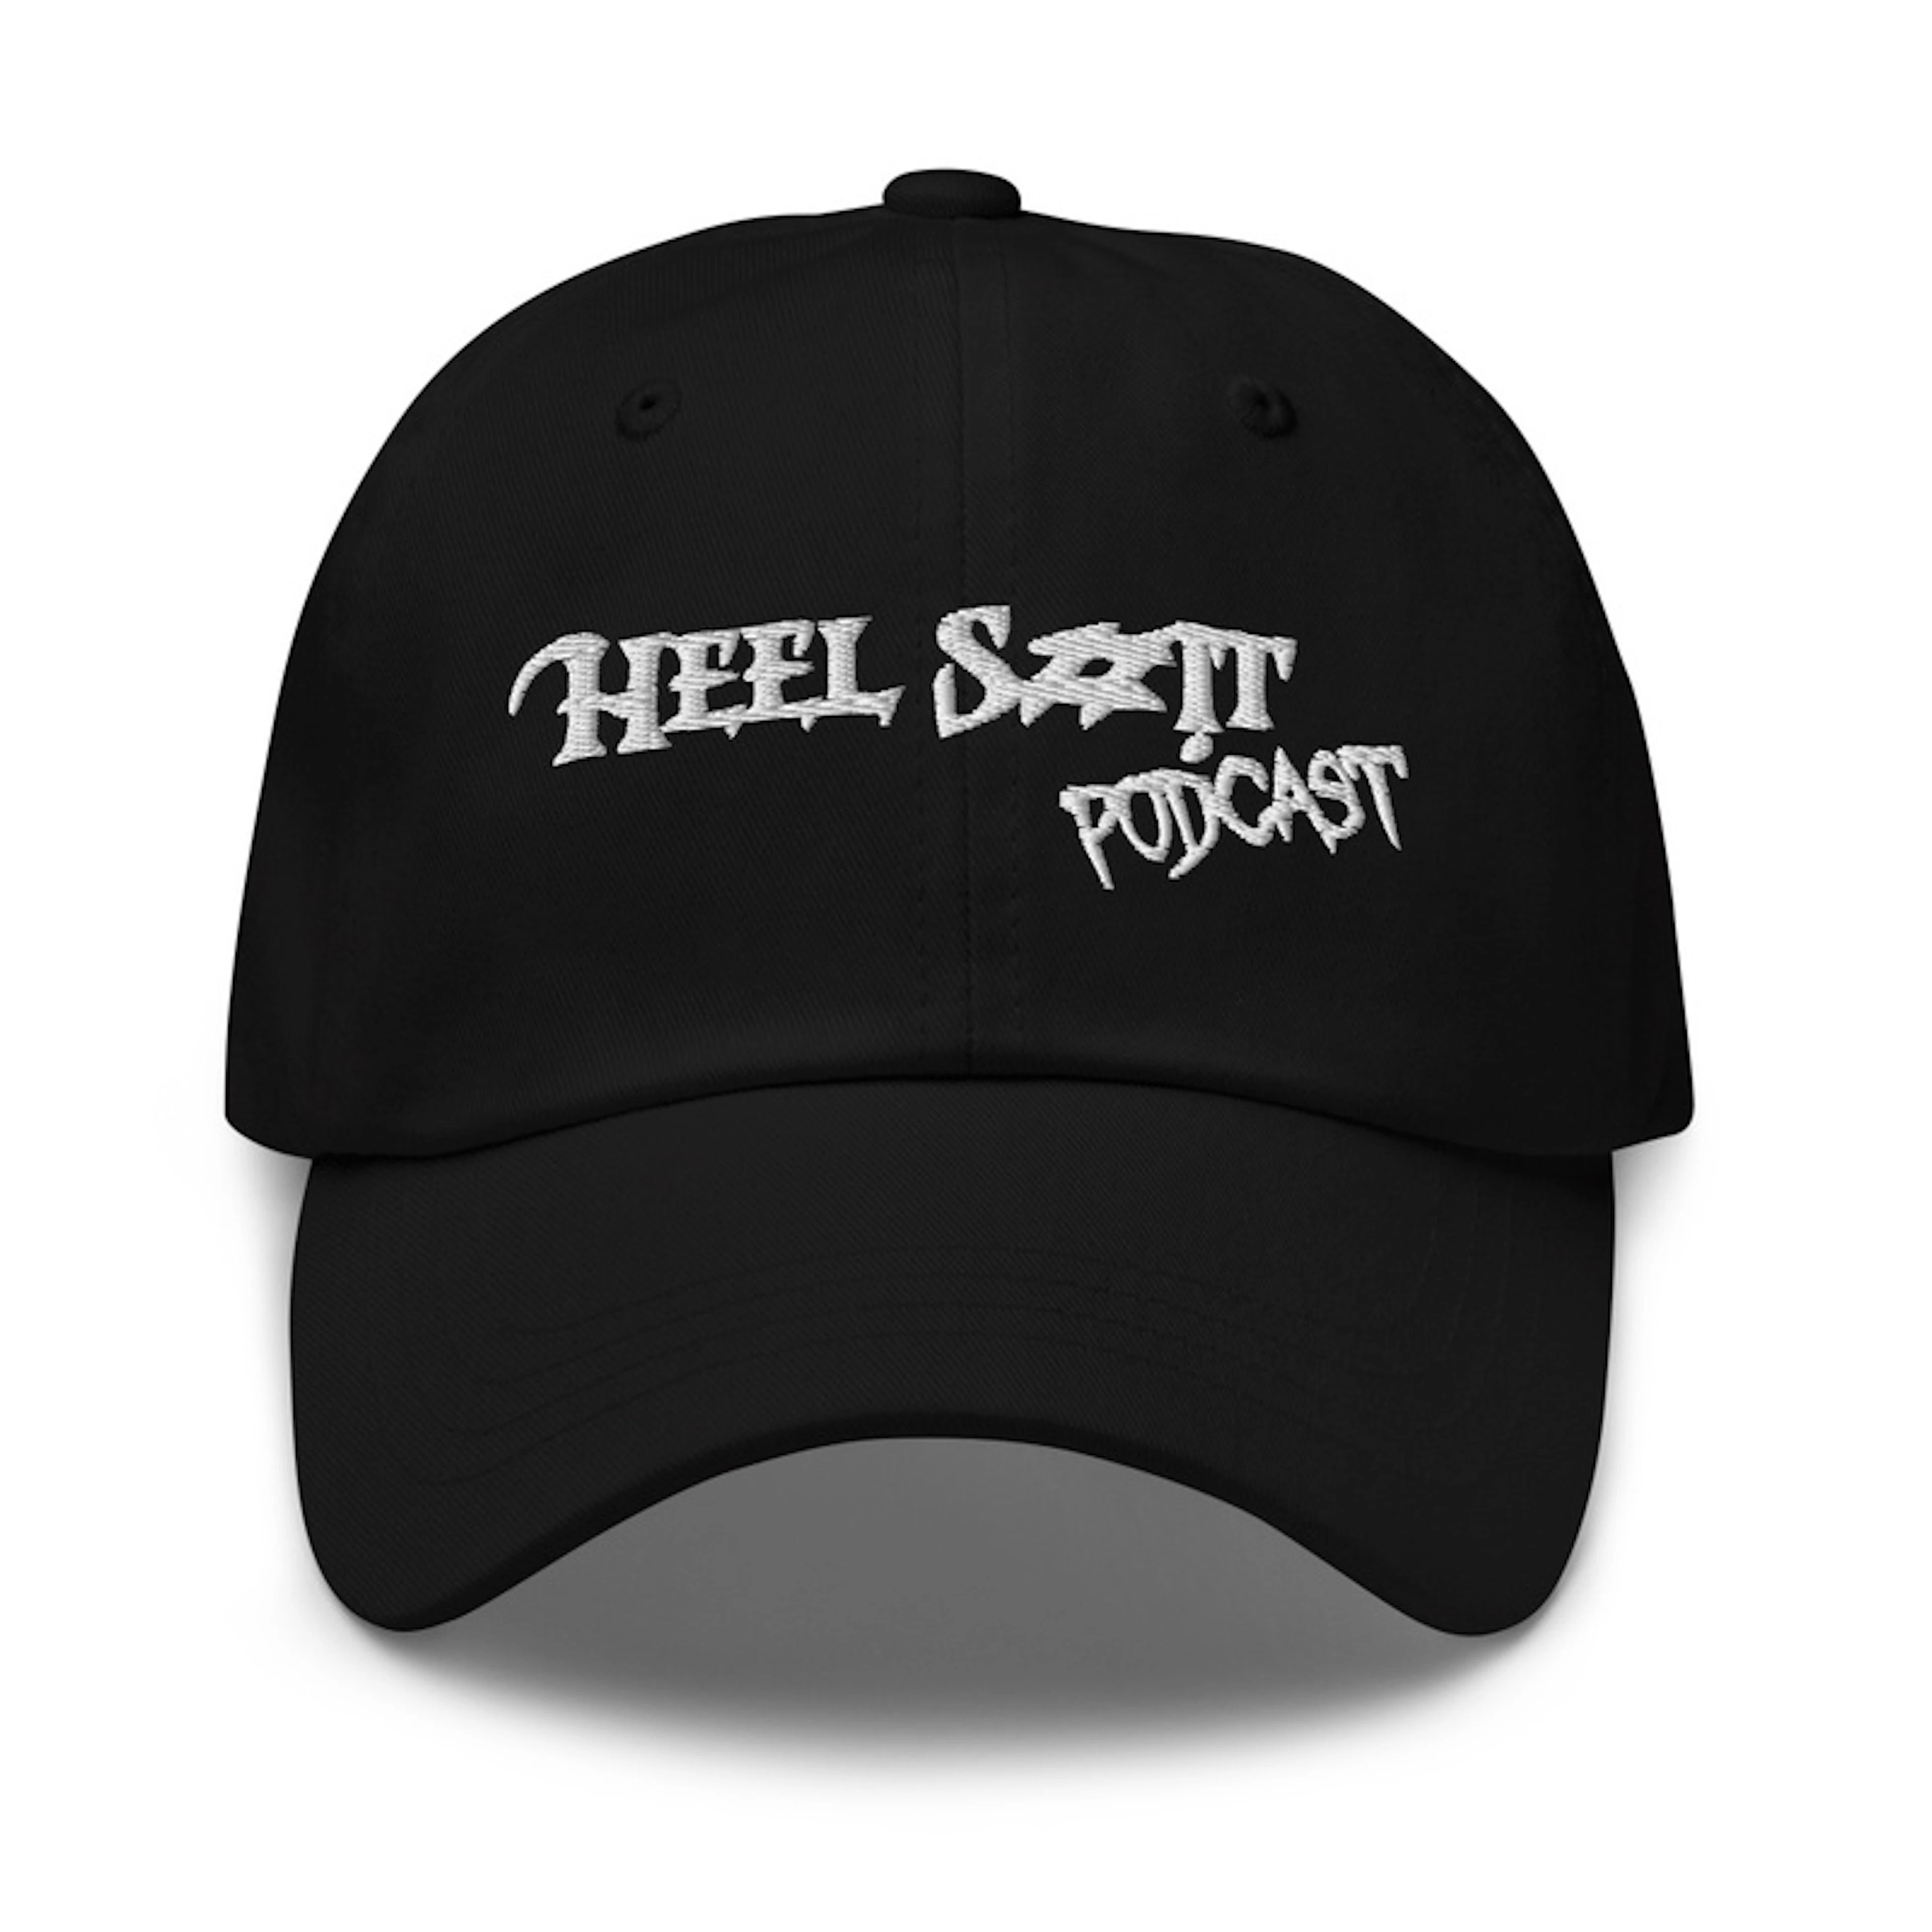 Heel S#!t Podcast Hat